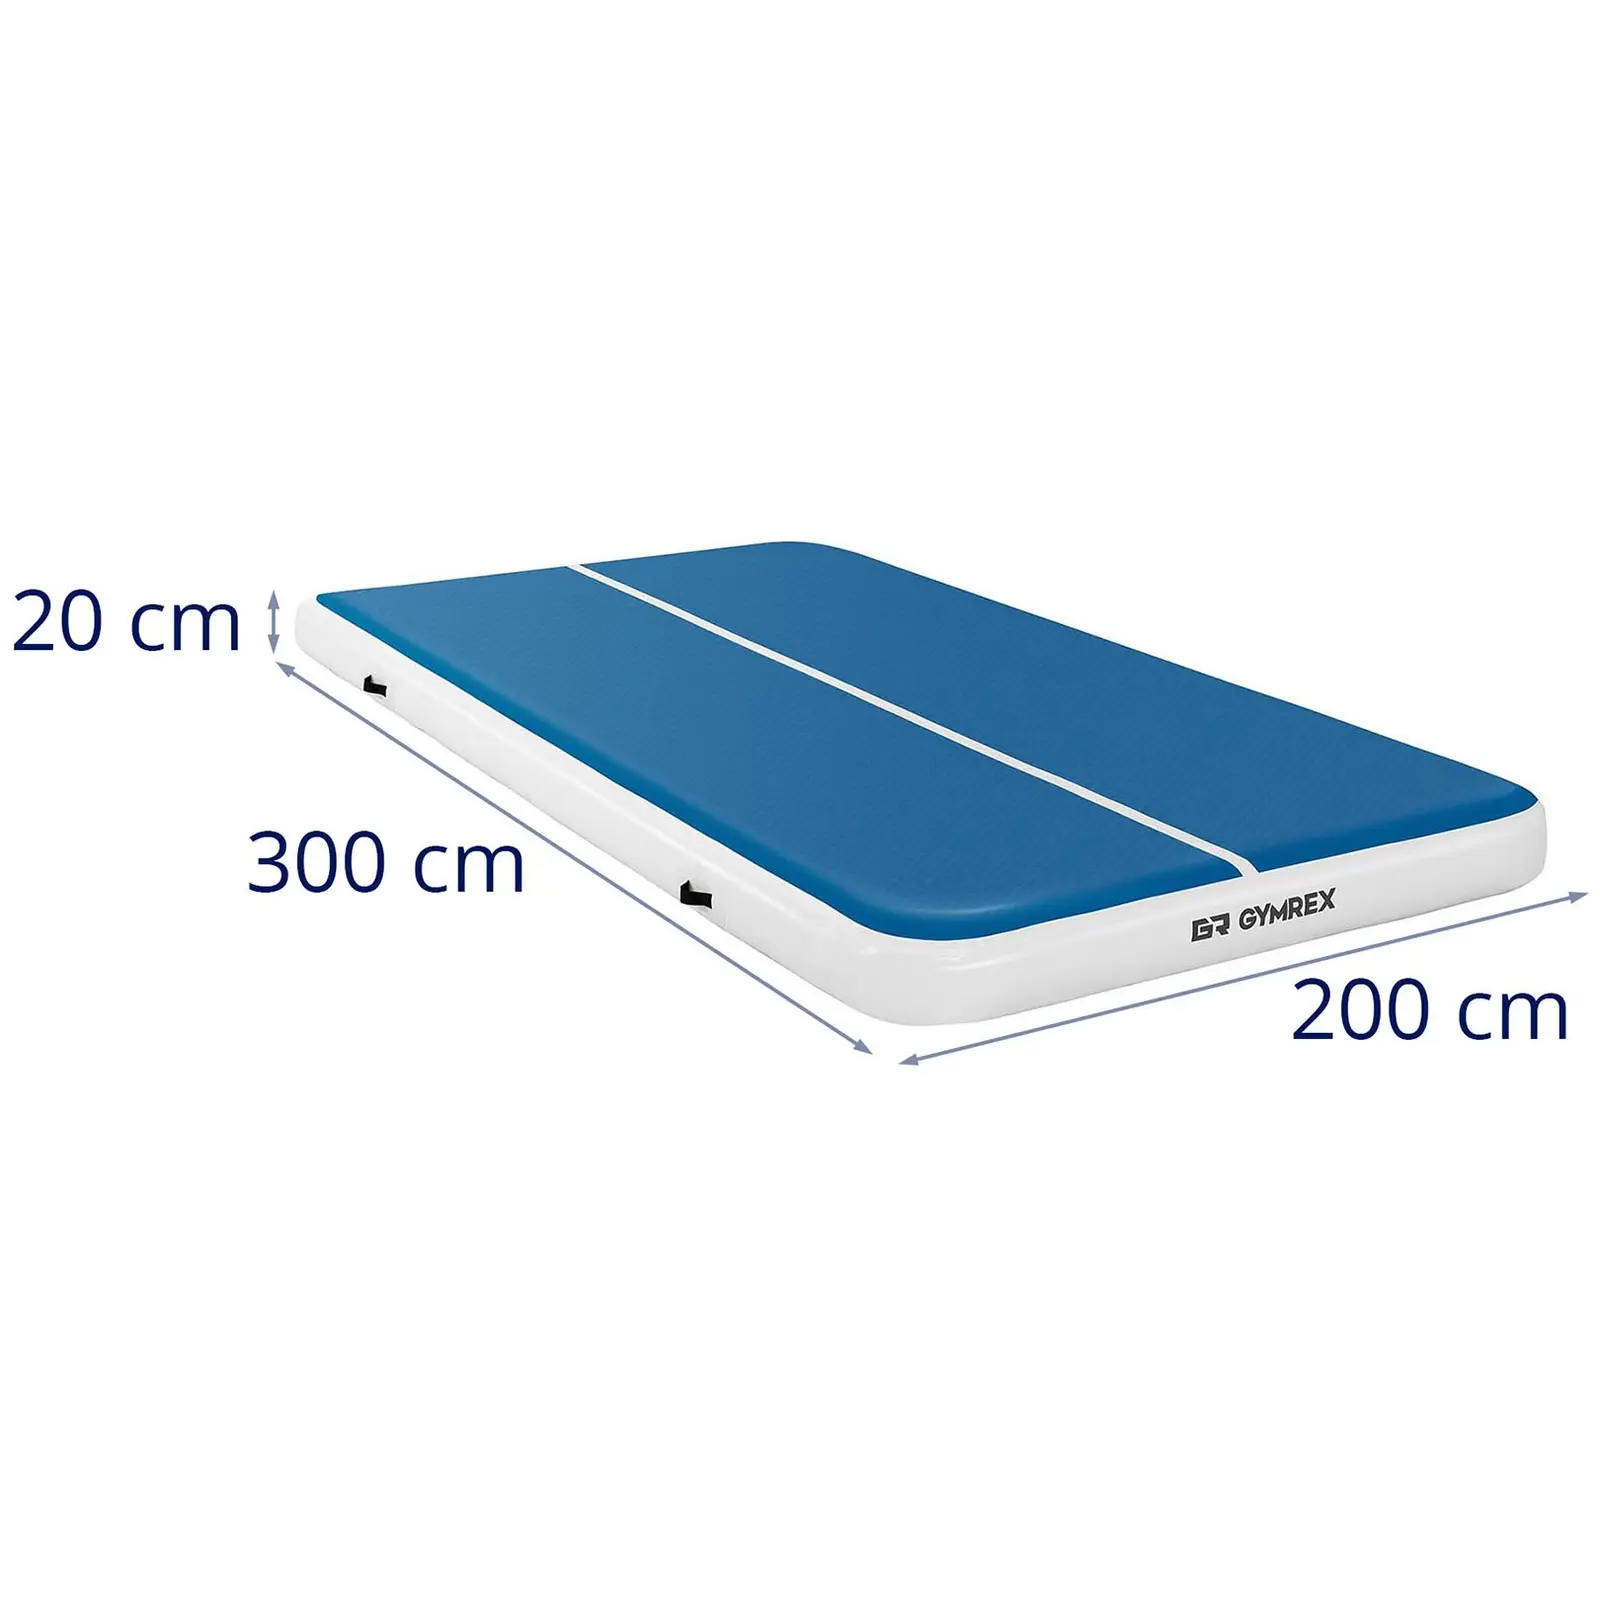 Set Aufblasbare Turnmatte inklusive Luftpumpe - 300 x 200 x 20 cm - 300 kg - blau/weiß